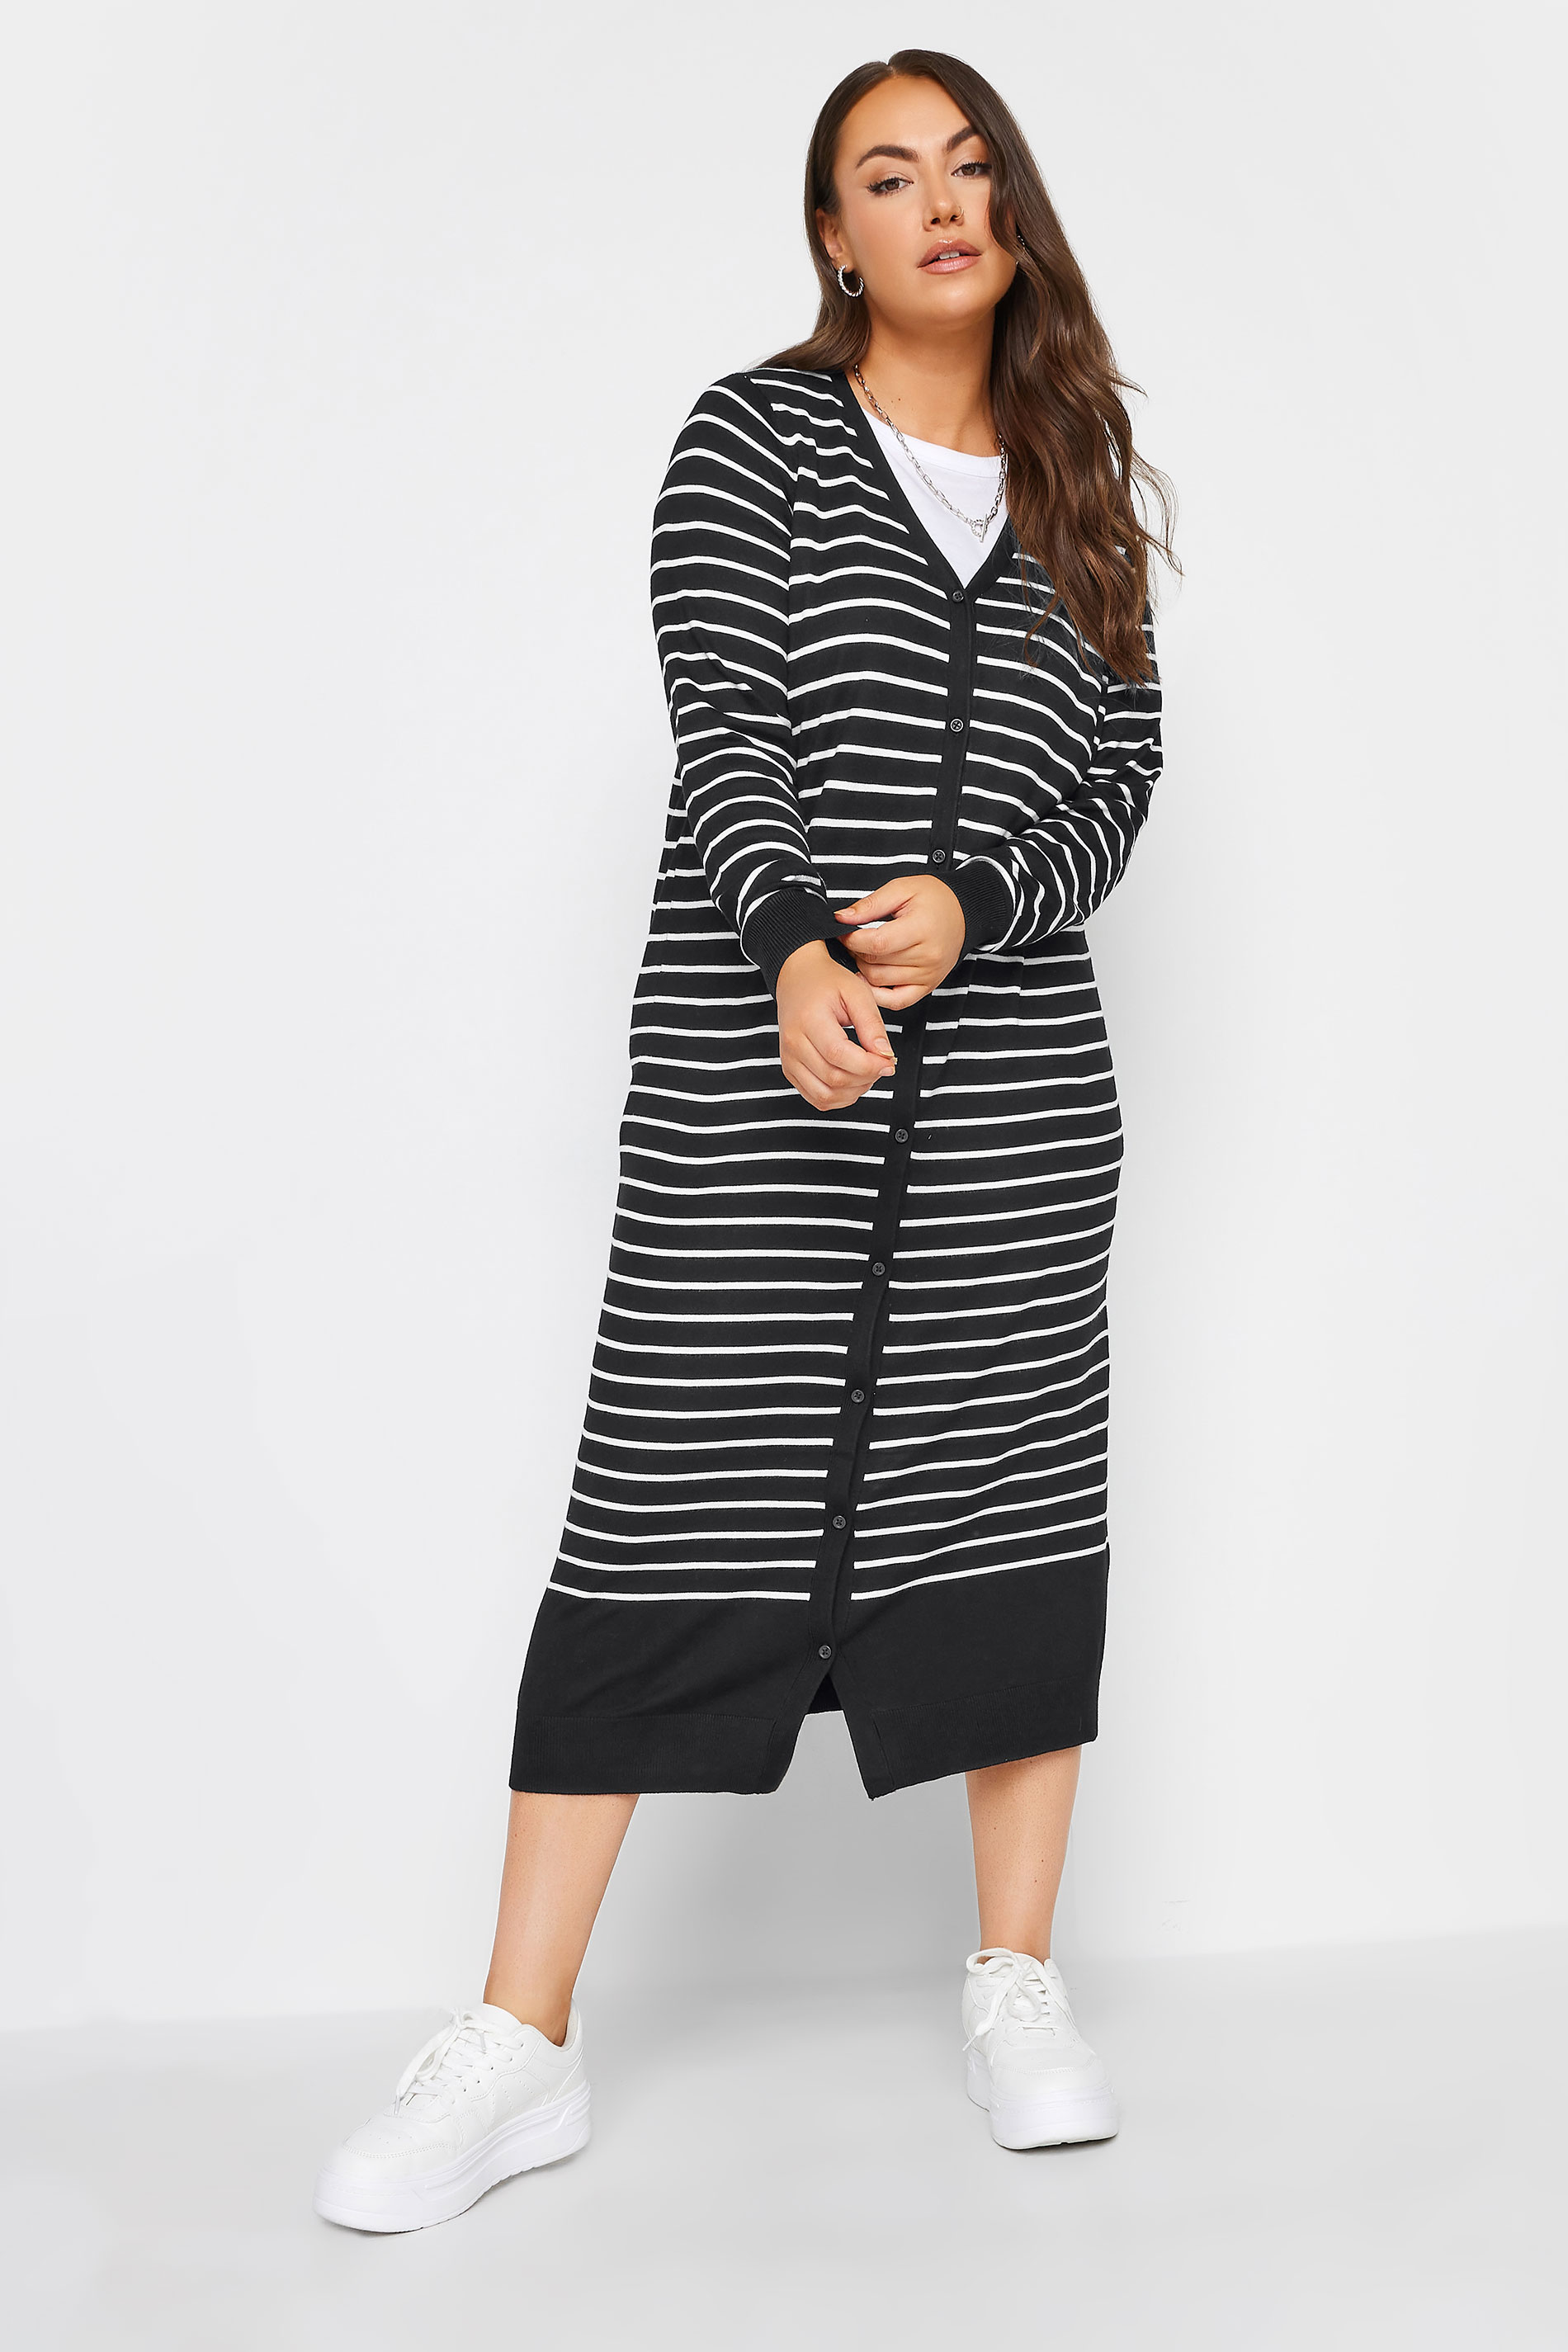 YOURS Plus Size Black Stripe Maxi Cardigan | Yours Clothing 1